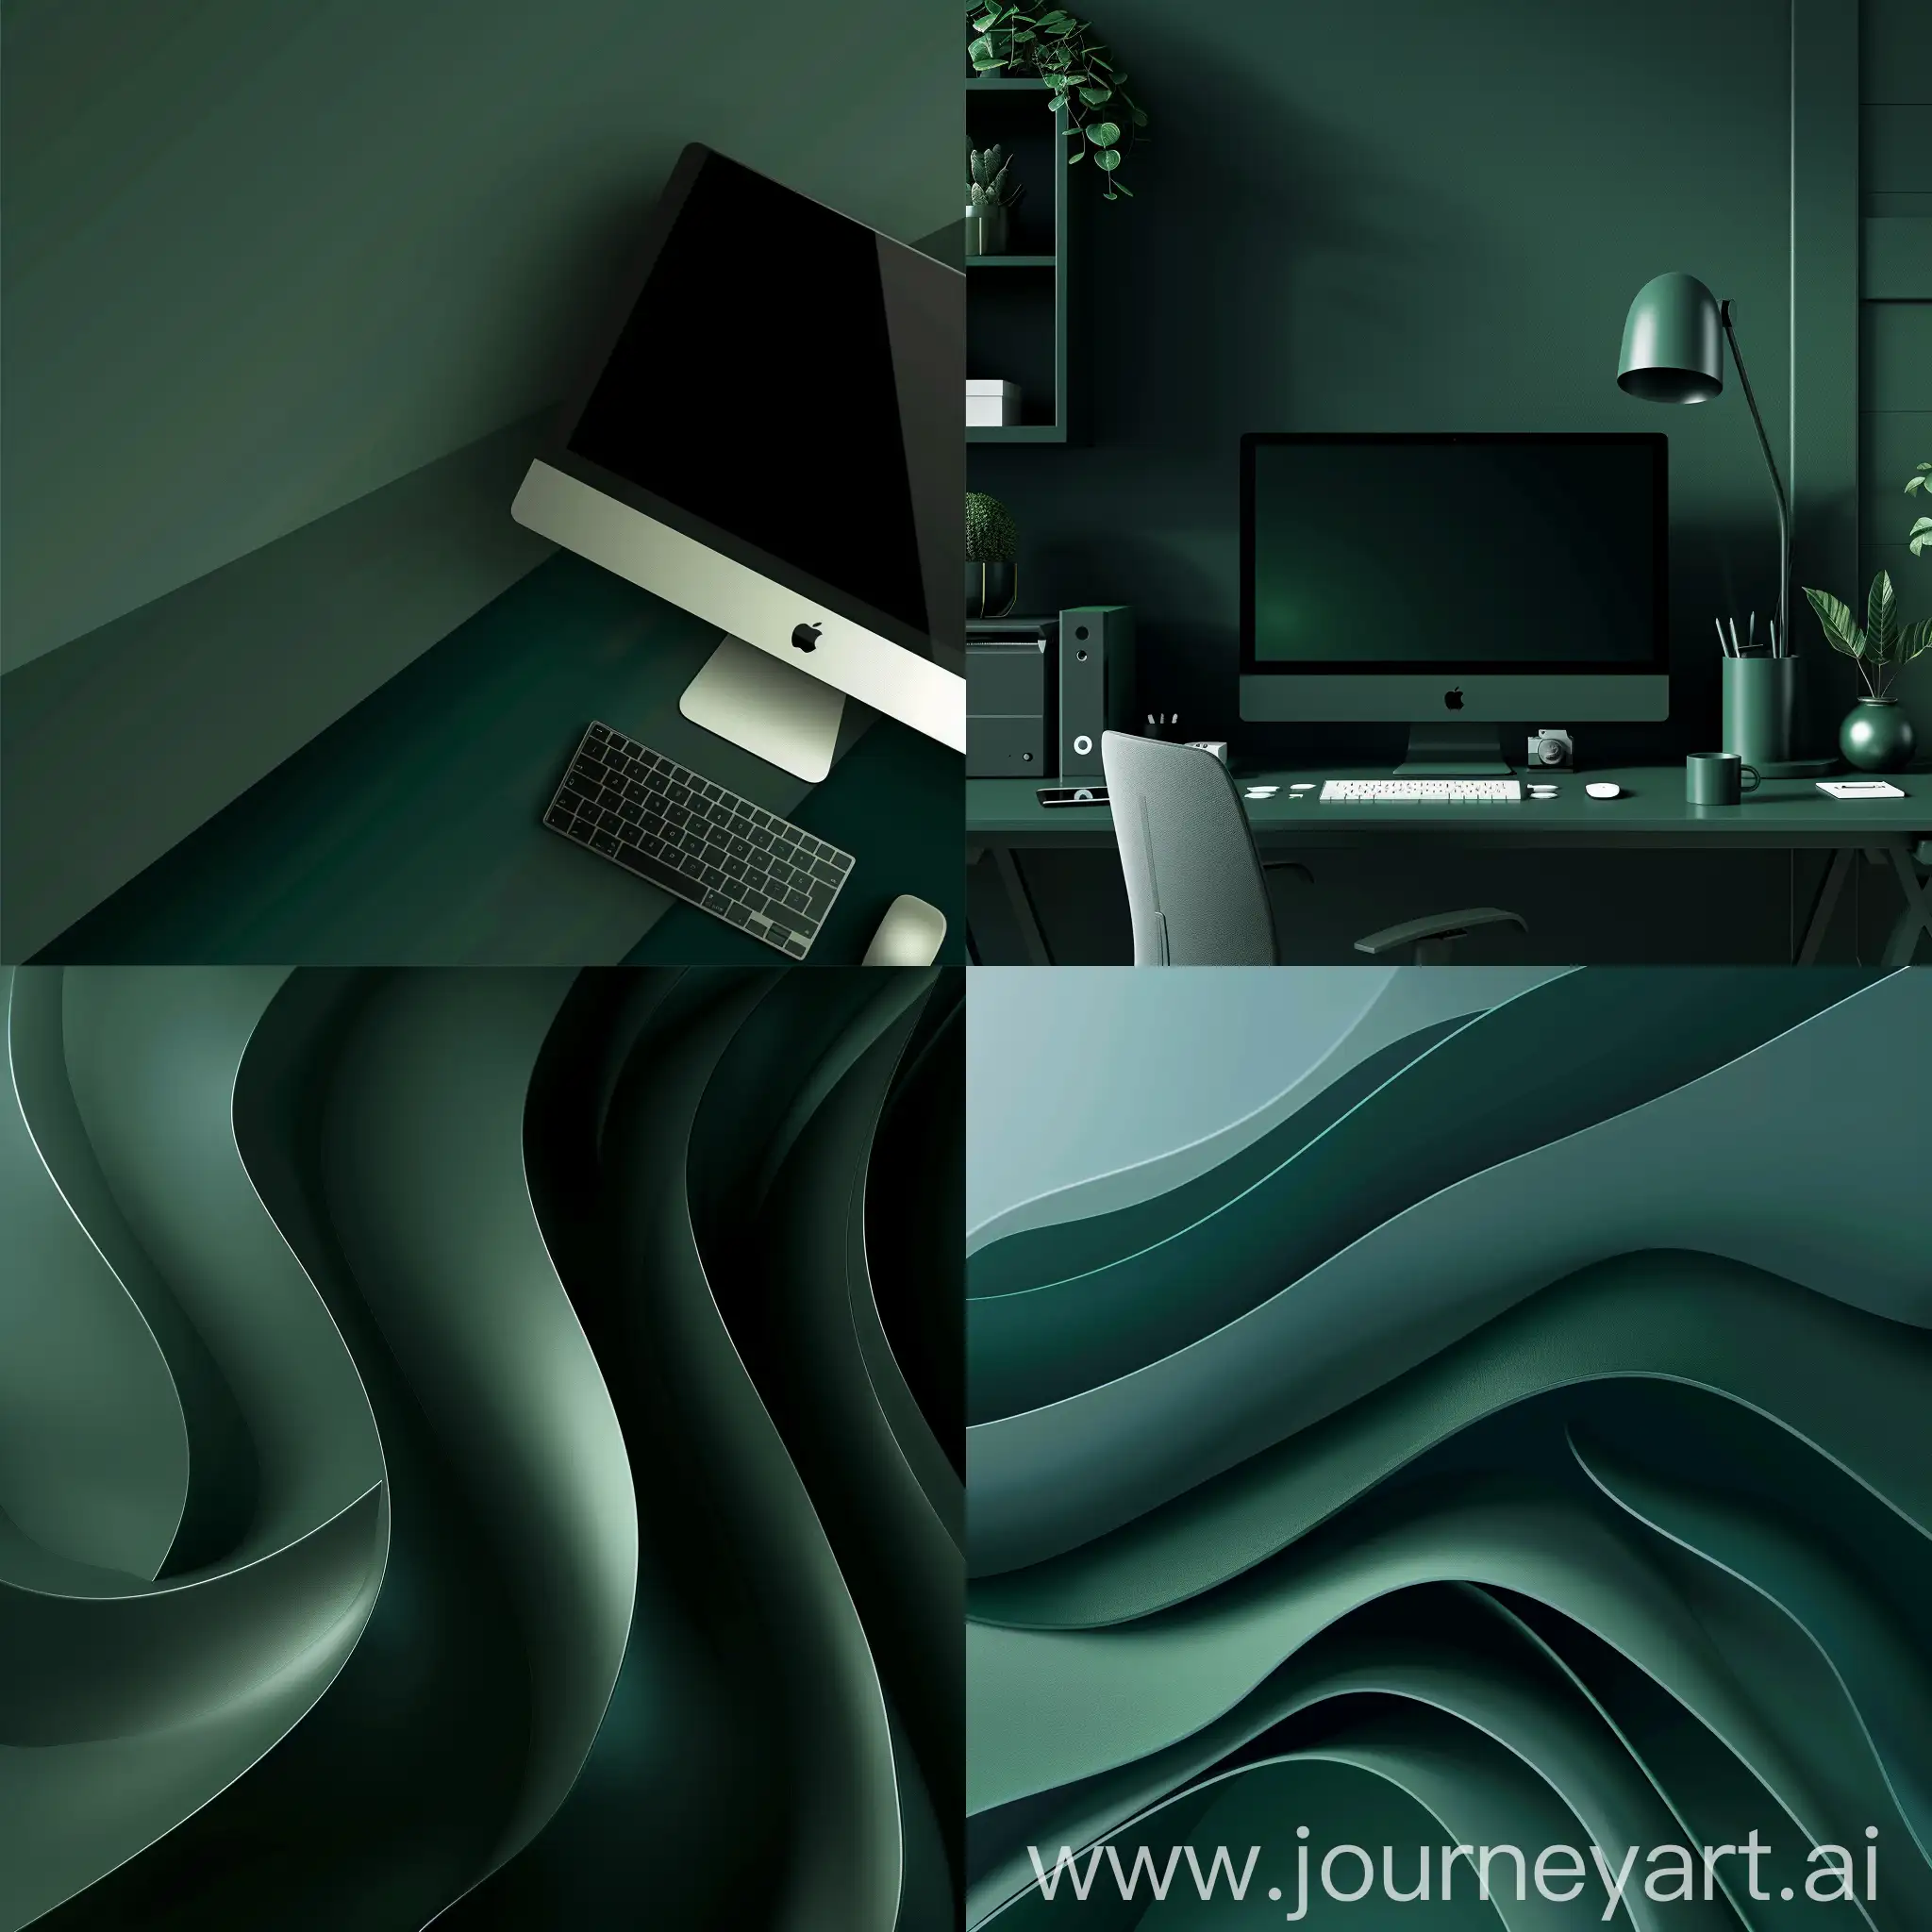 beautiful minimalistic modern computer wallpaper 16:9 in a dark green shade